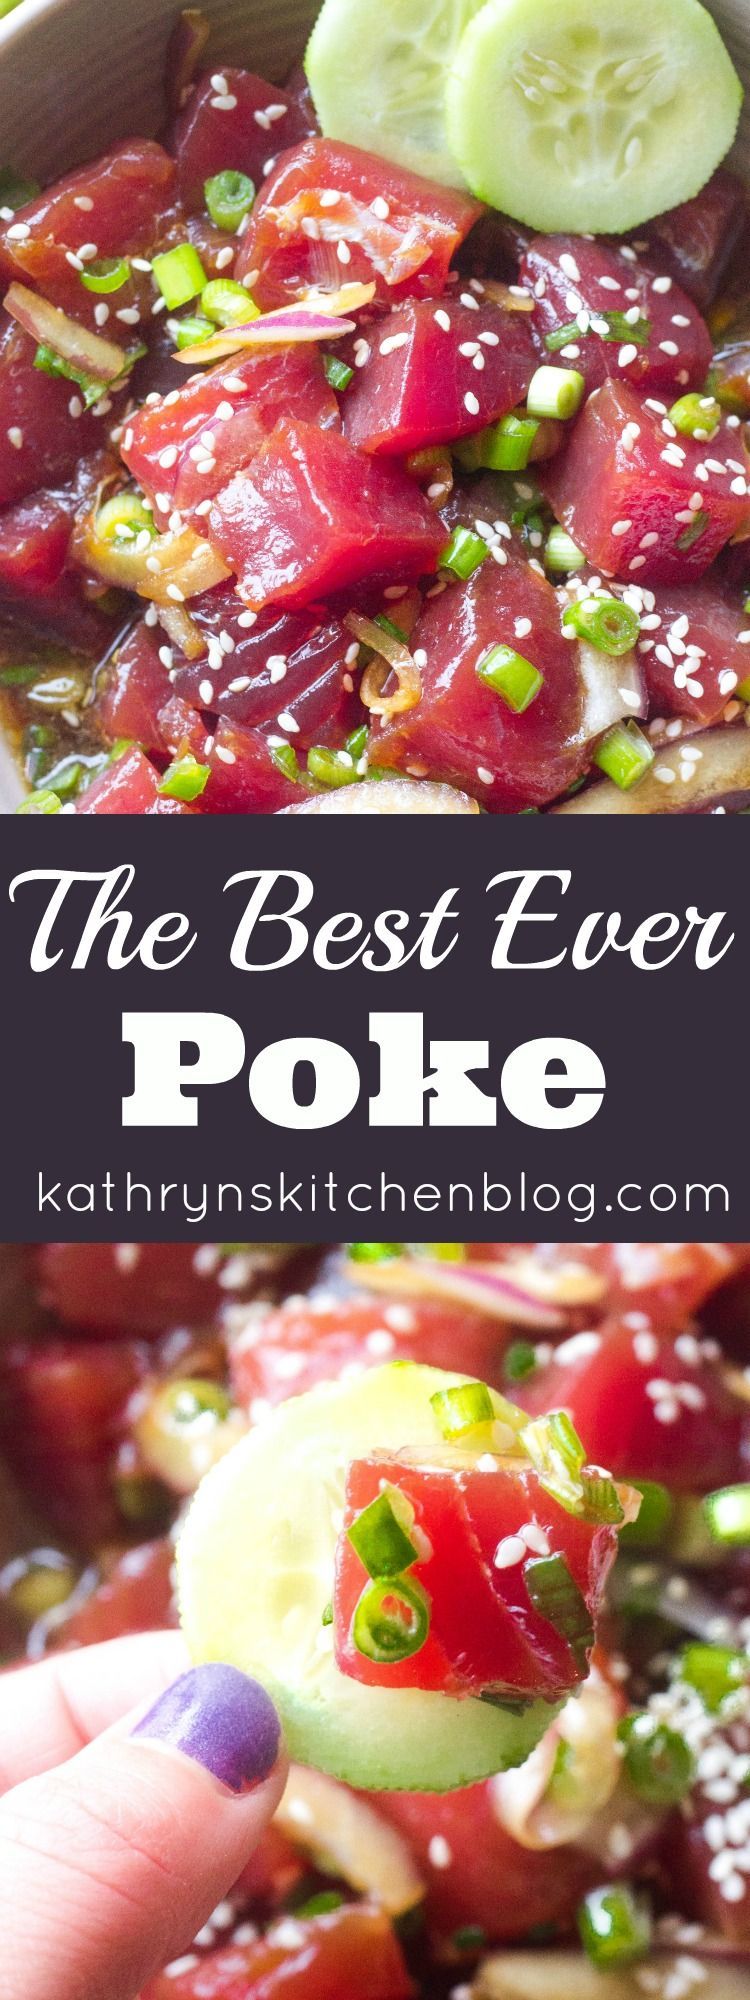 The Best Homemade Tuna Poke - Kathryn's Kitchen -   18 healthy recipes Tuna kitchens ideas